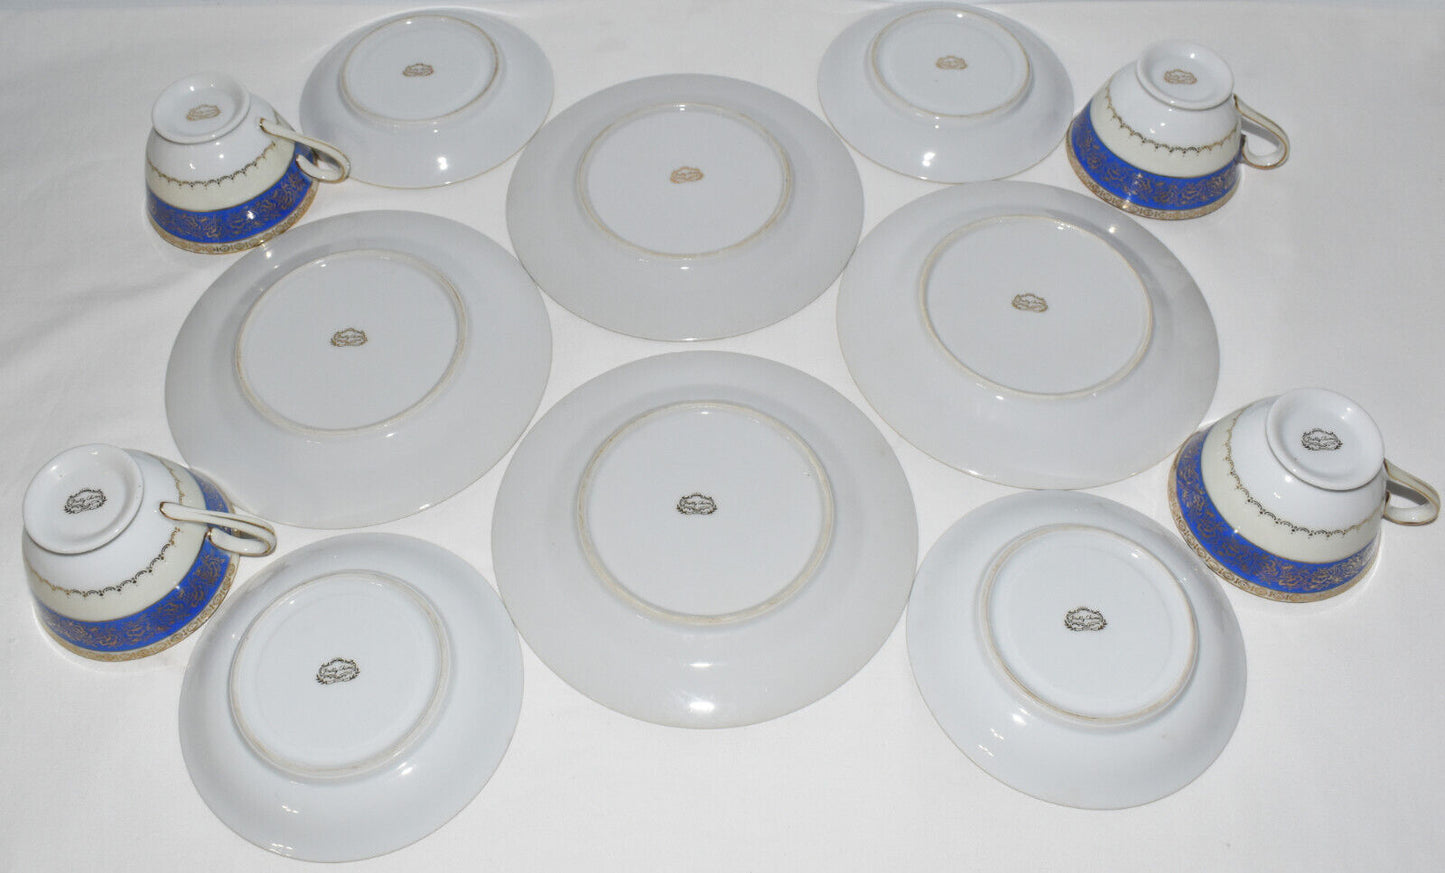 Rare Antique Porcelain Plates Teacups & Saucers 12pc Set Marked "Pretty China"